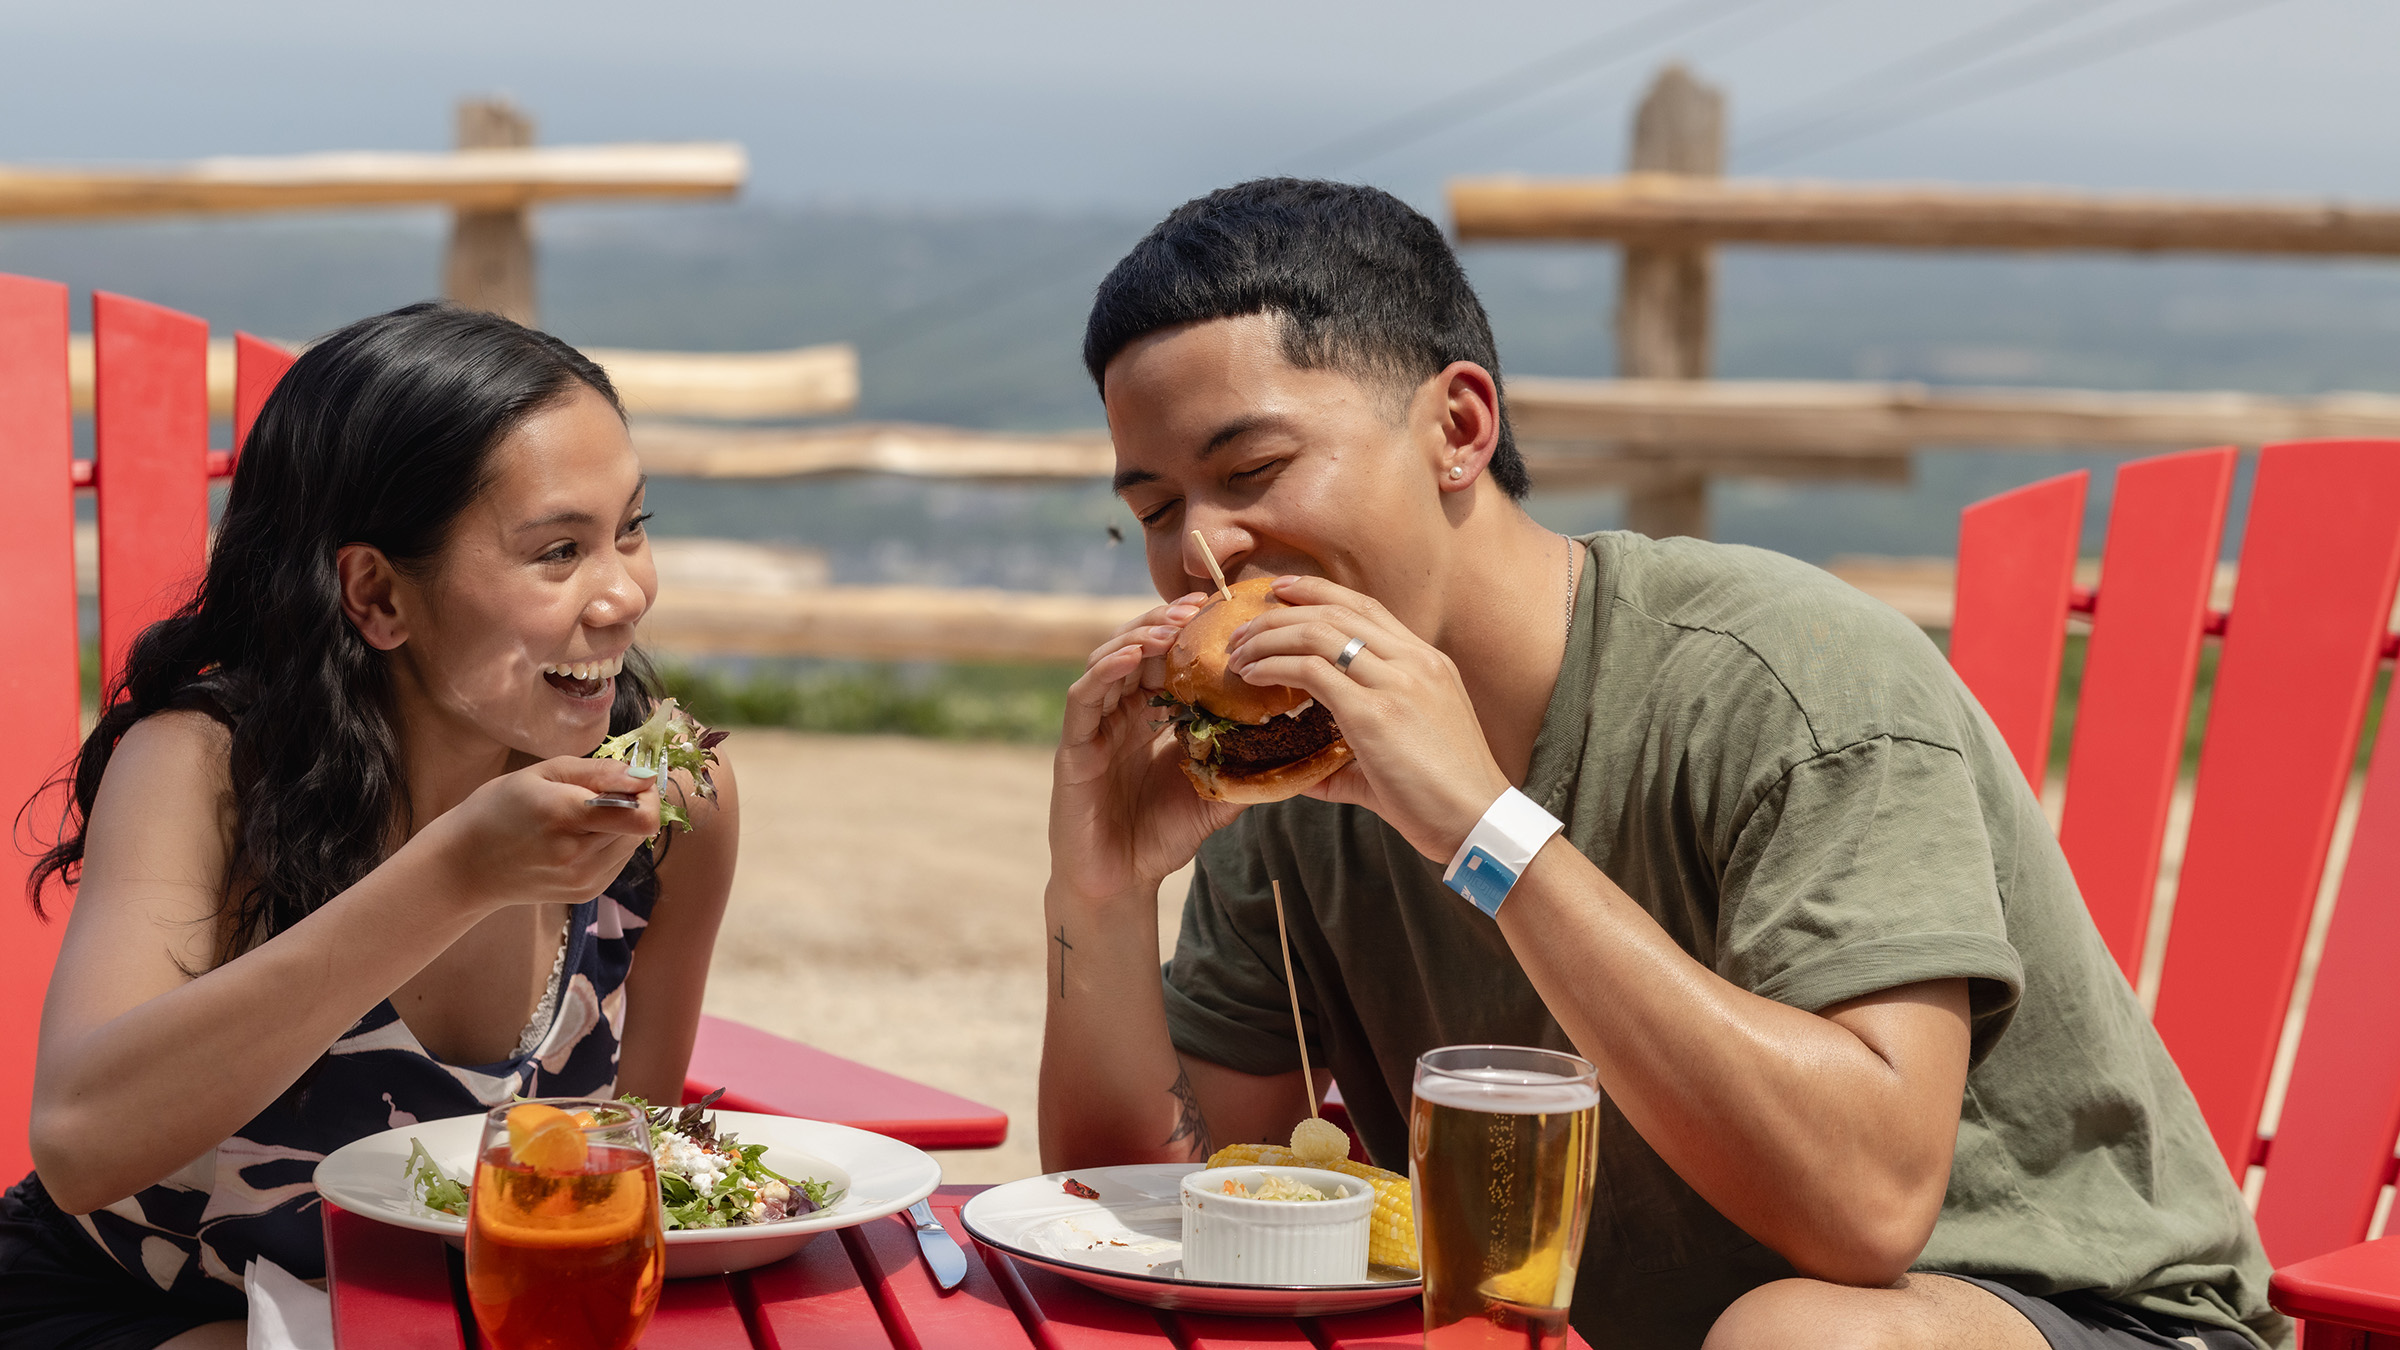 a man and woman eating burgers at a table